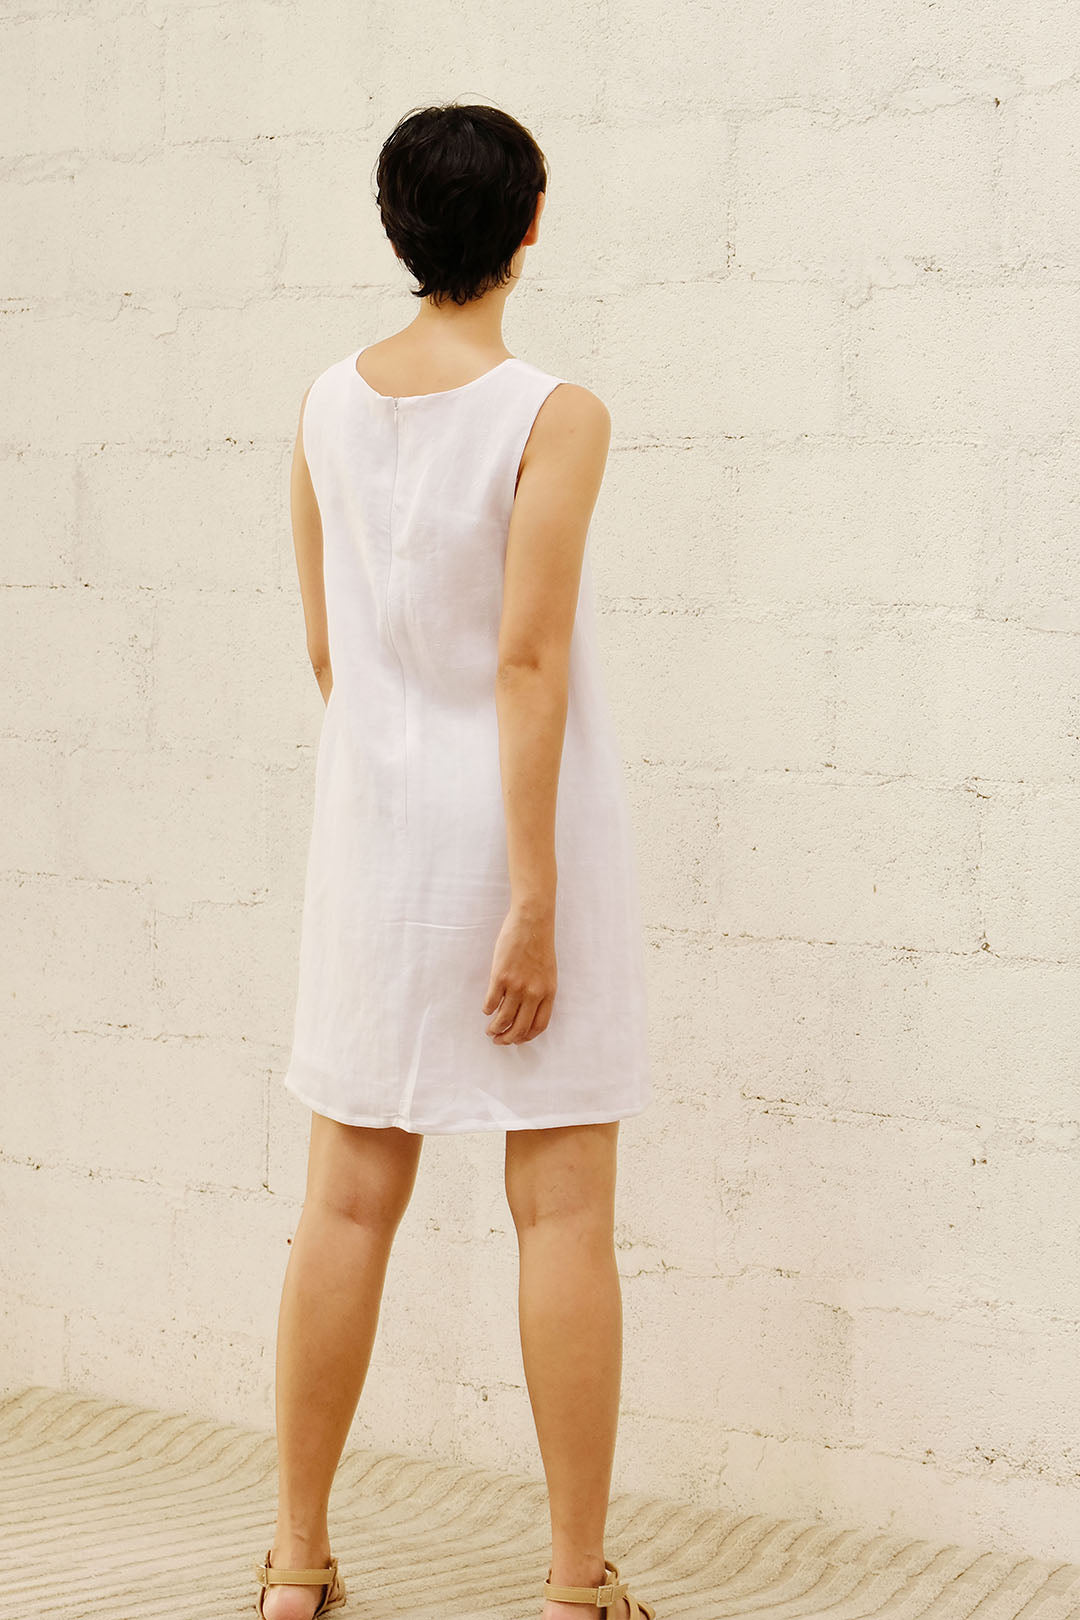 U NECK SHIFT DRESS in textured white